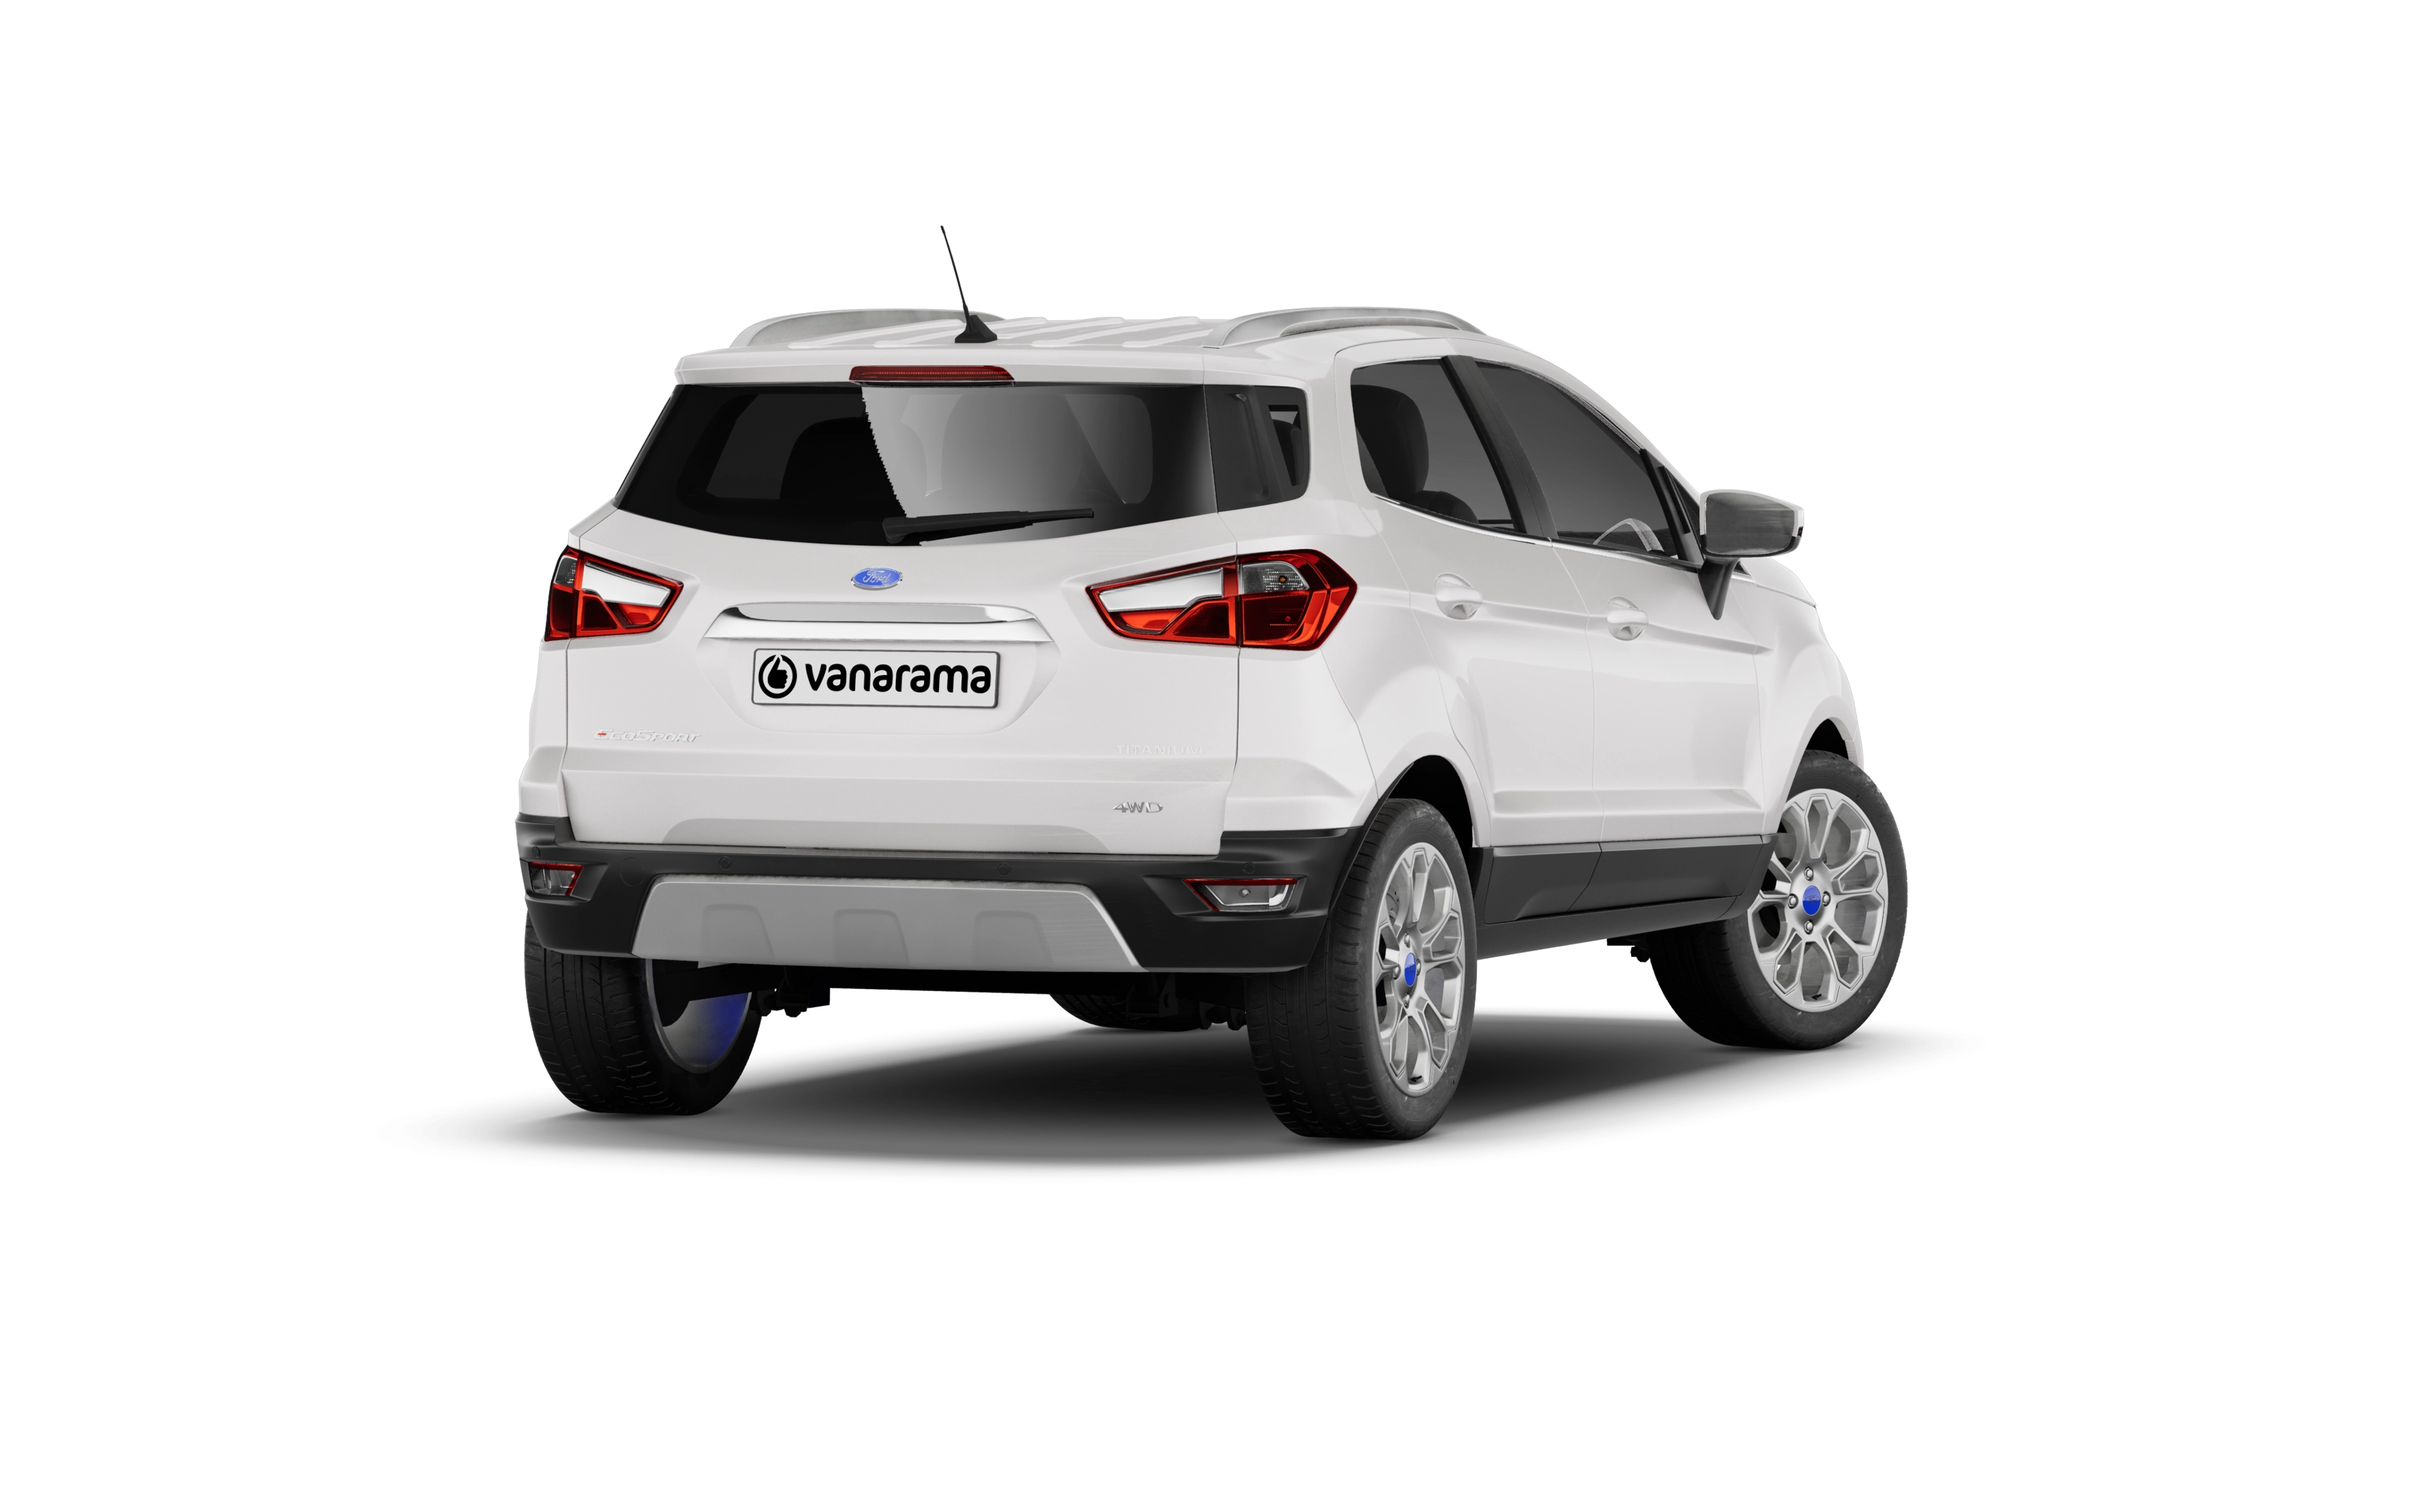 Ford ecosport hatchback 1.0 ecoboost 125 active [x pack] 5 doors